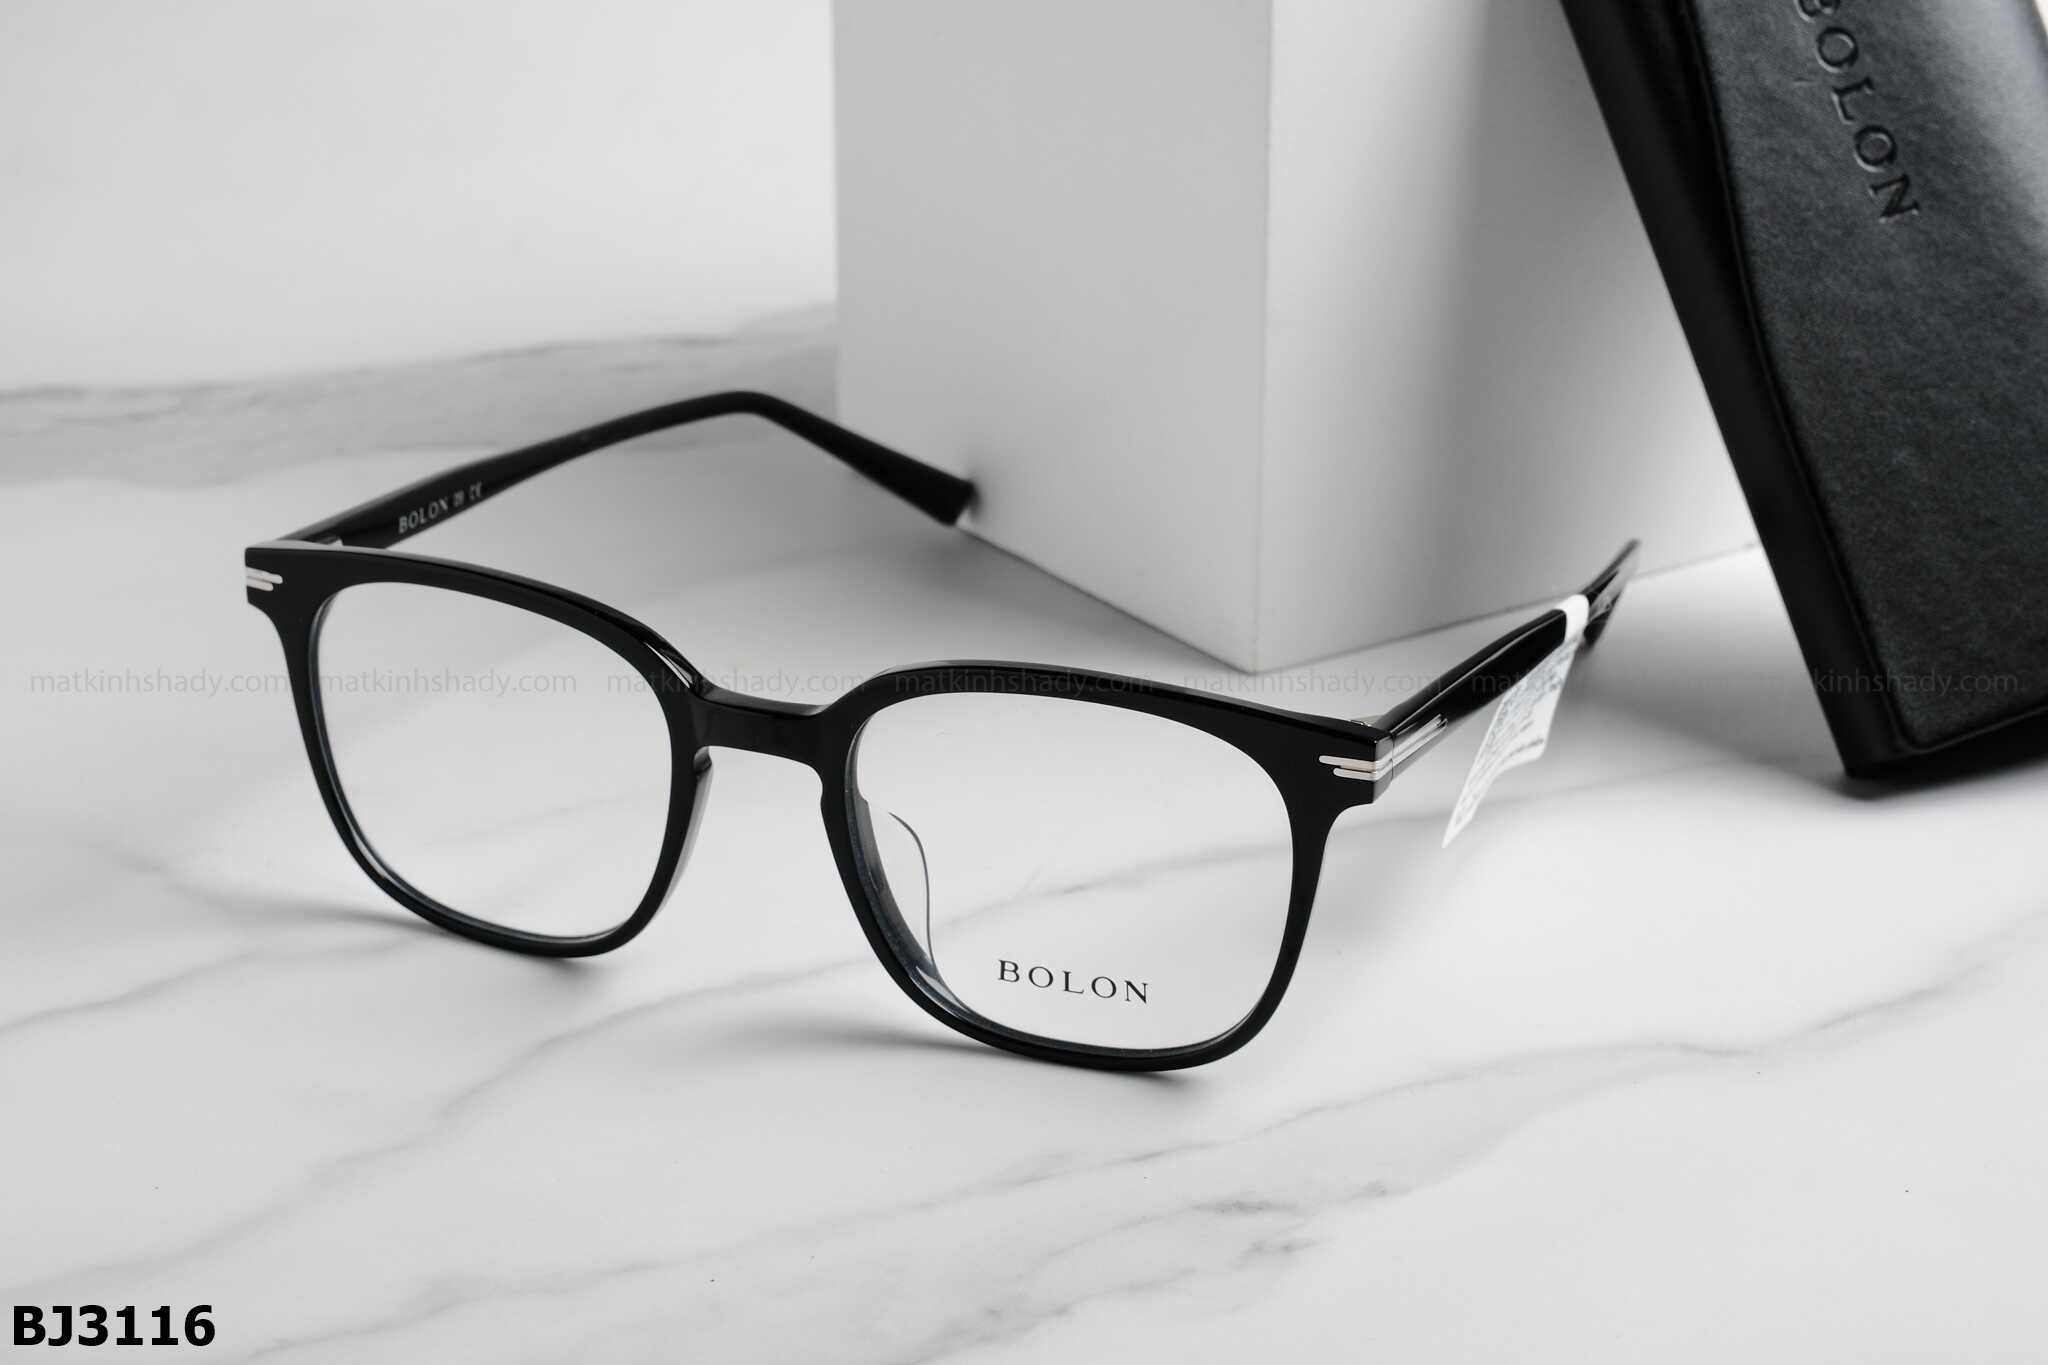  Bolon Eyewear - Glasses - BJ3116 